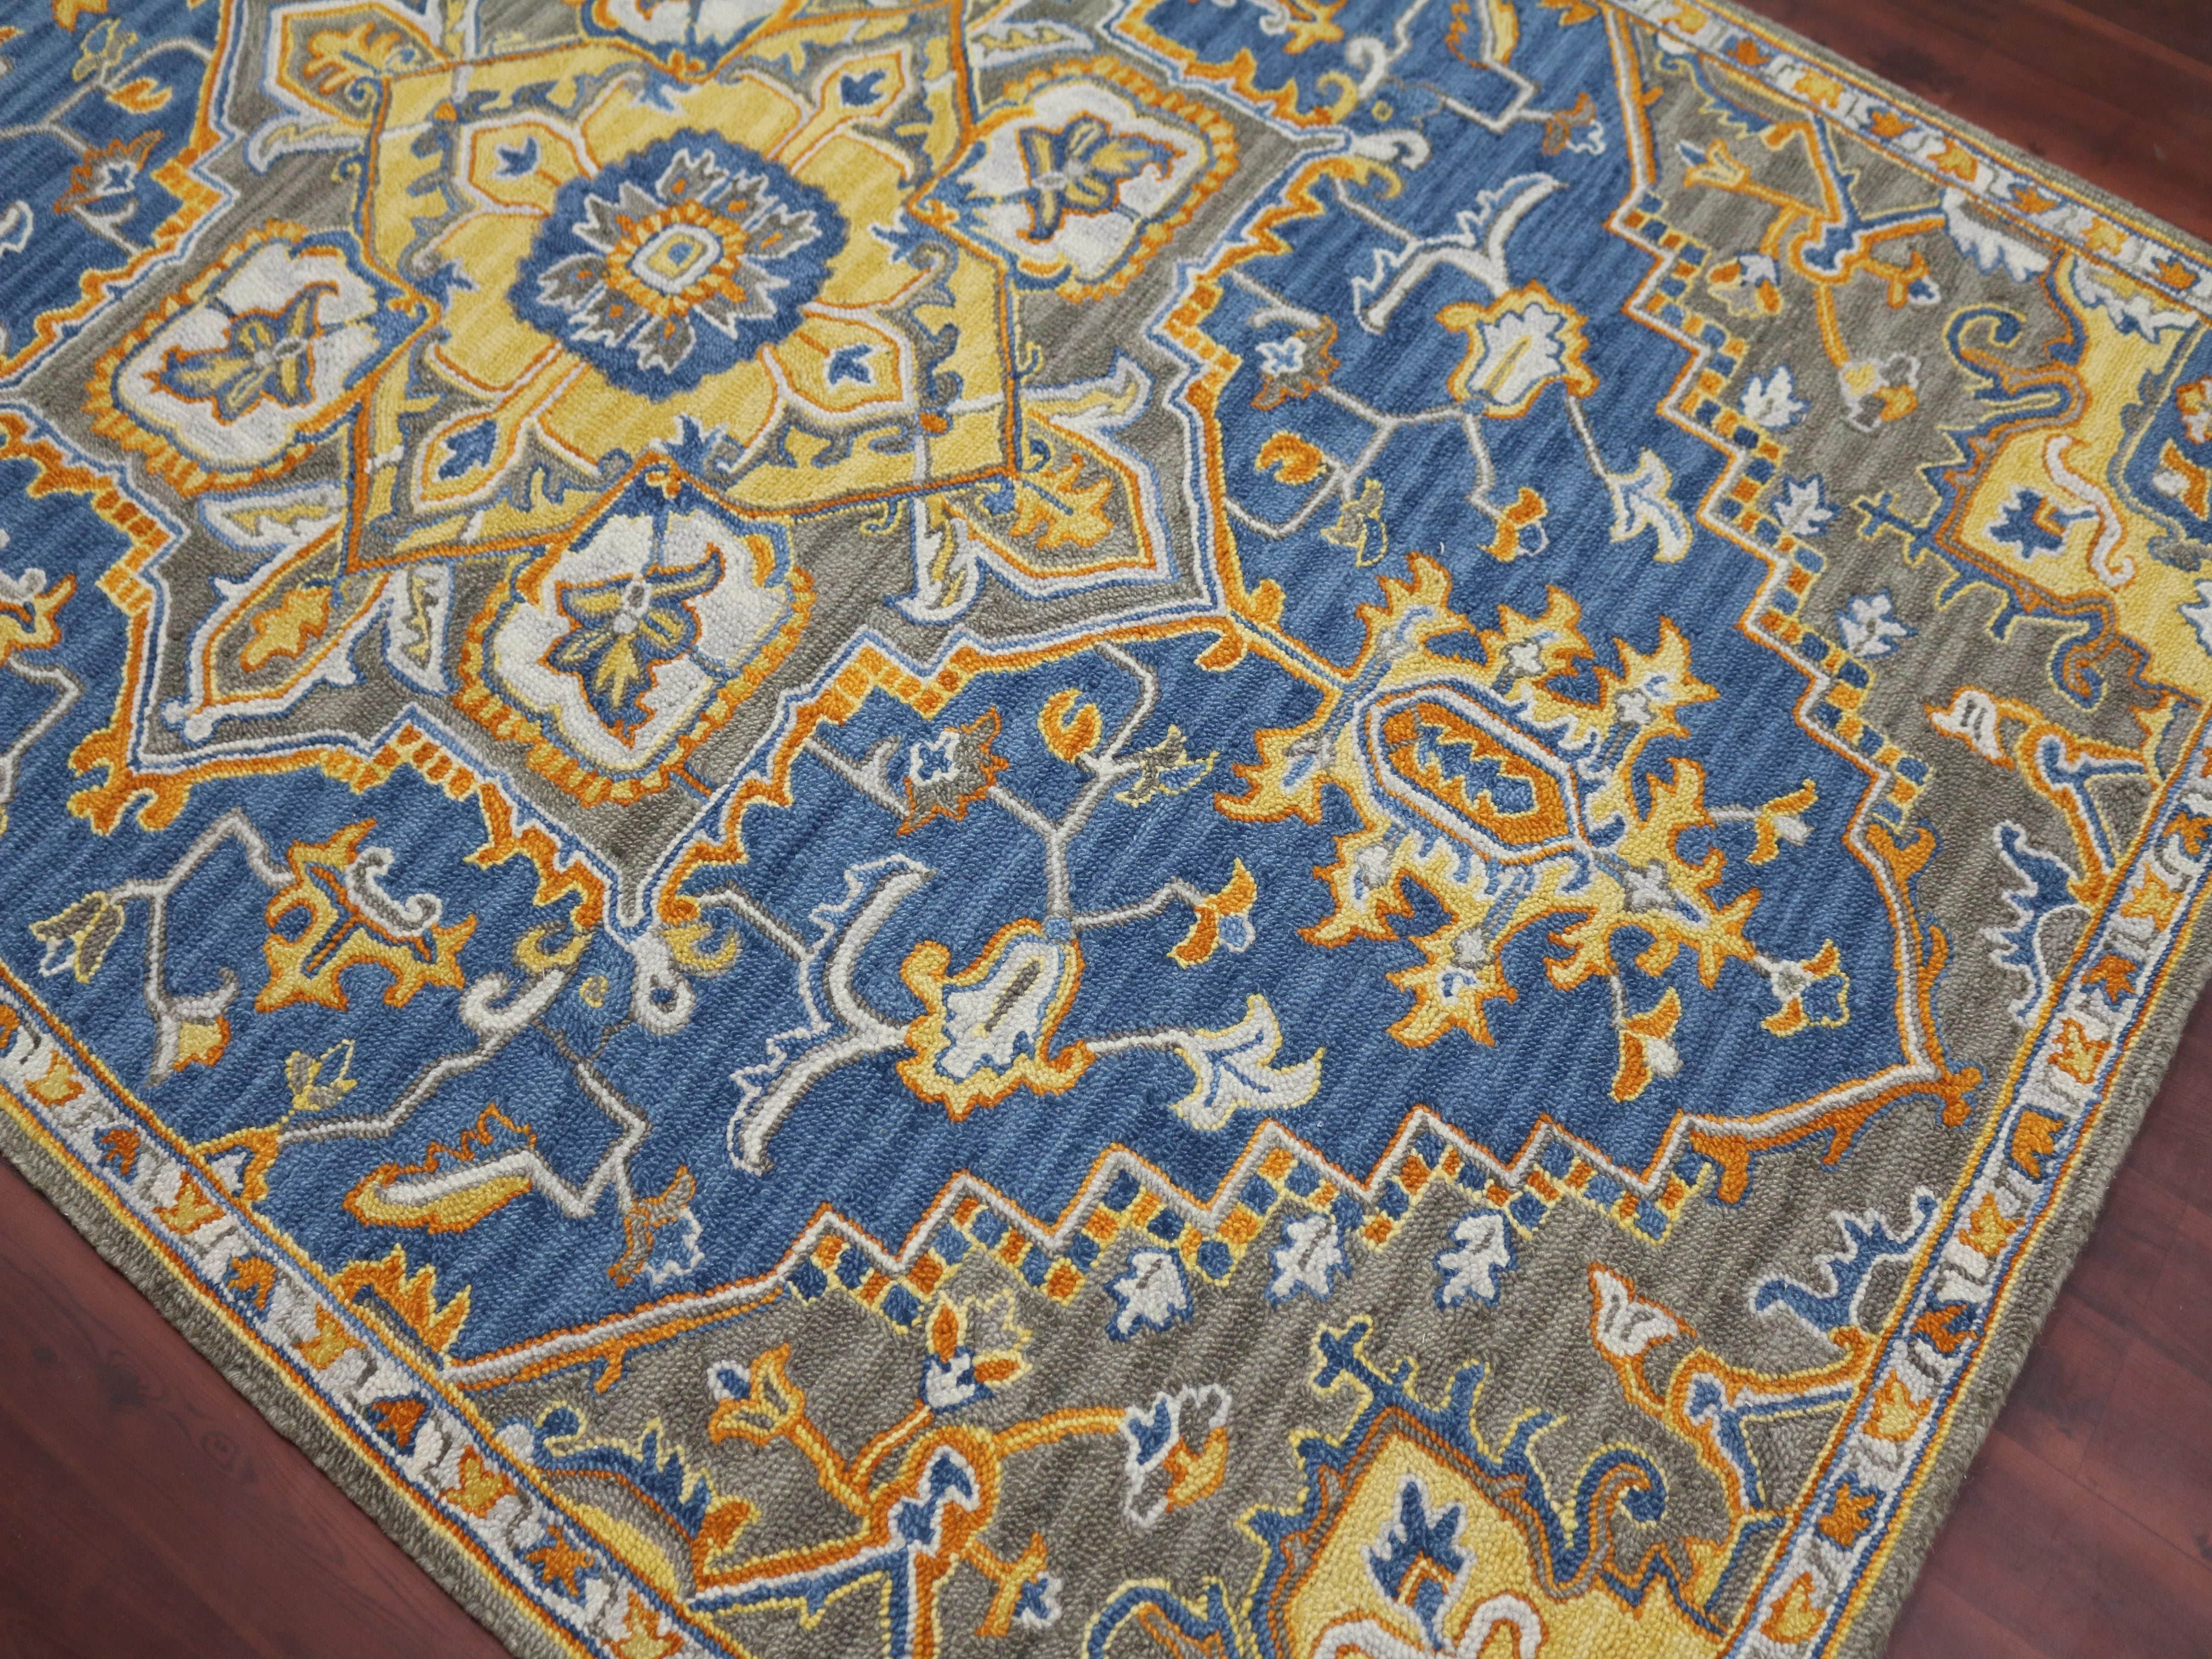 PASTEL BLUE Wool Boho 5X8 Feet  Hand-Tufted Carpet - Rug